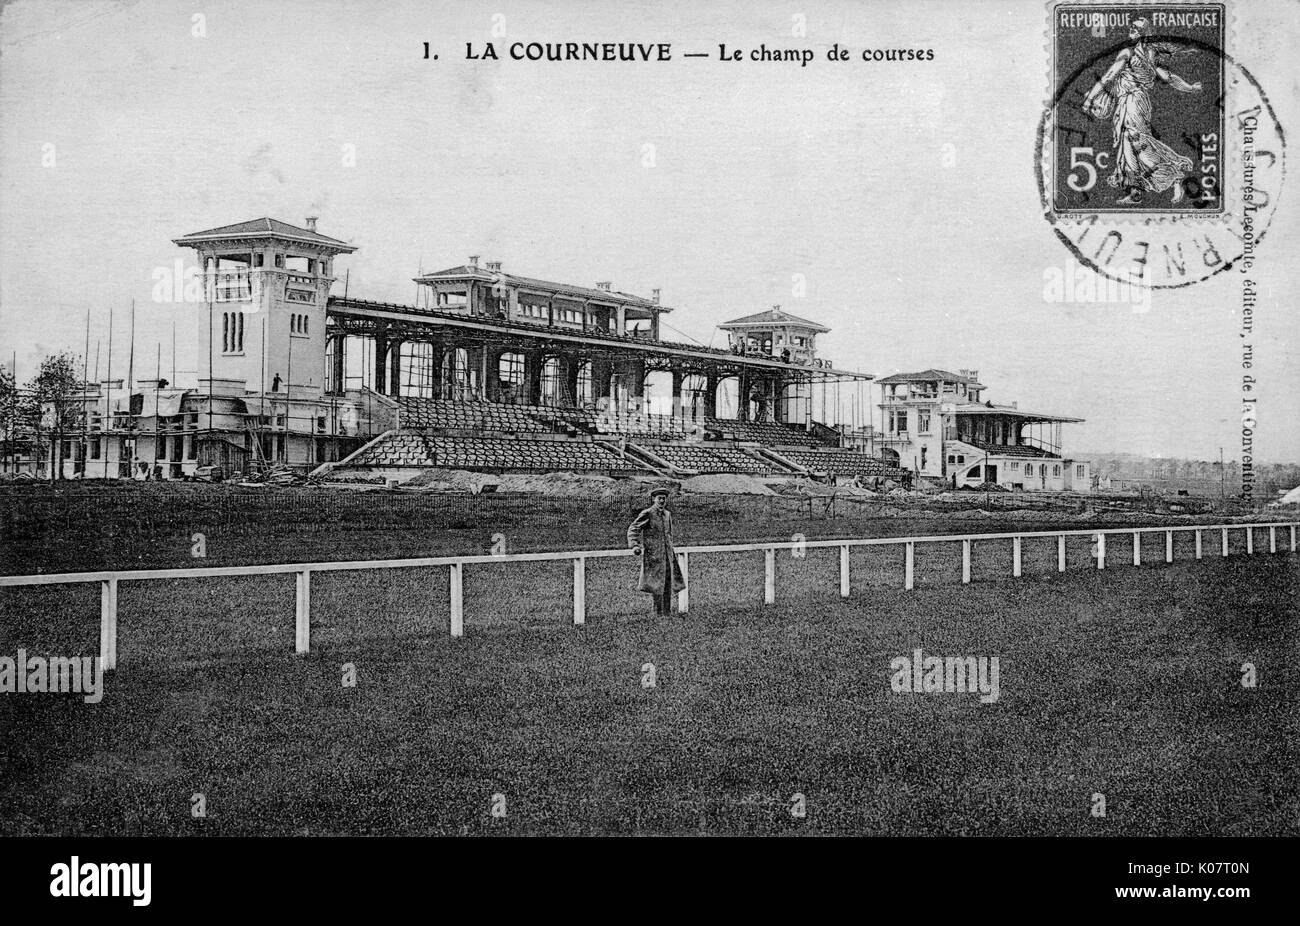 La Courneuve racecourse with grandstand, France Stock Photo